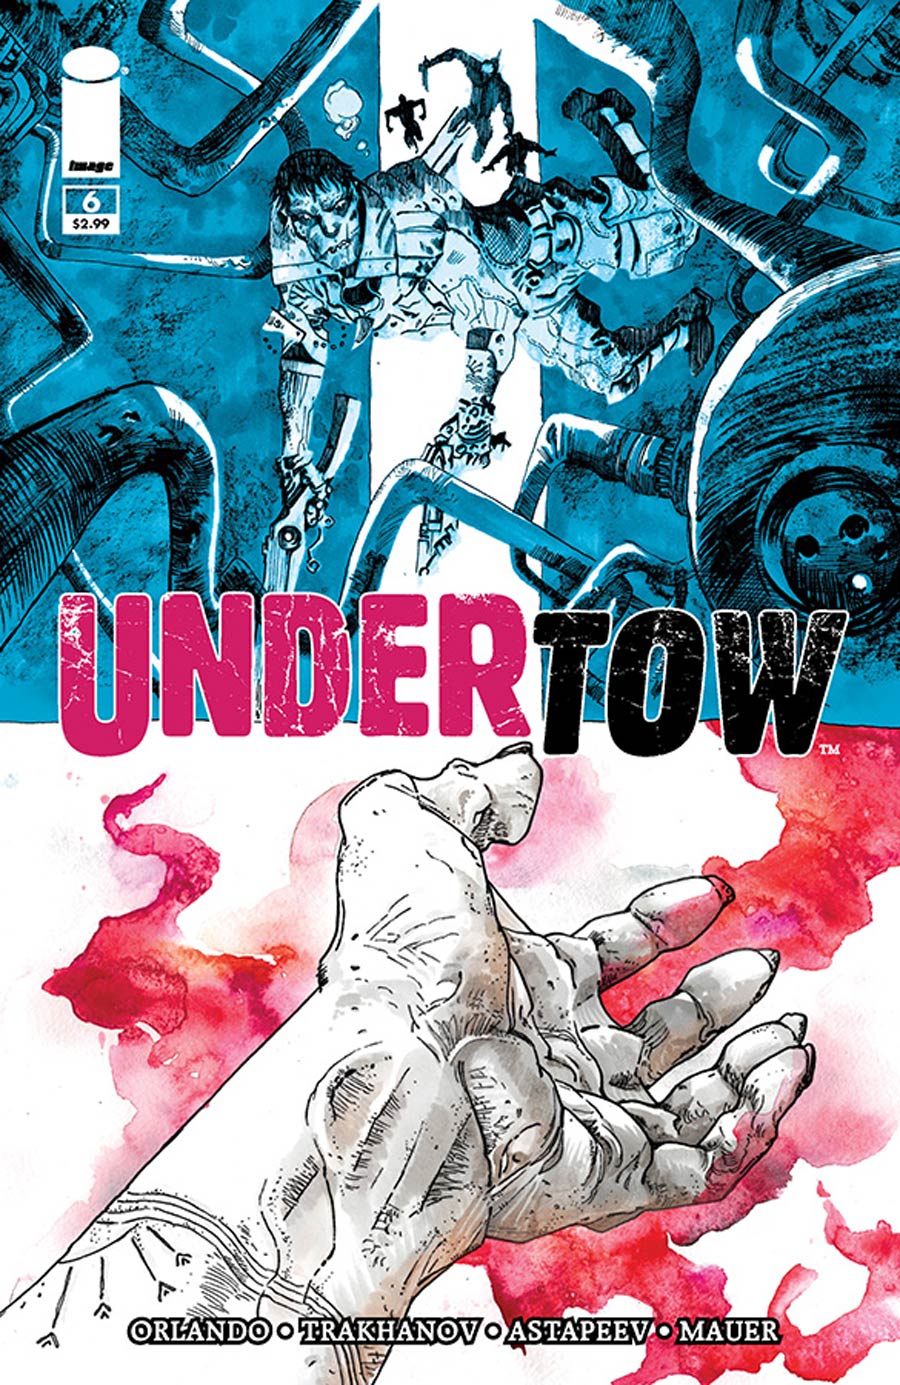 Undertow #6 Cover A Artyom Trakhanov